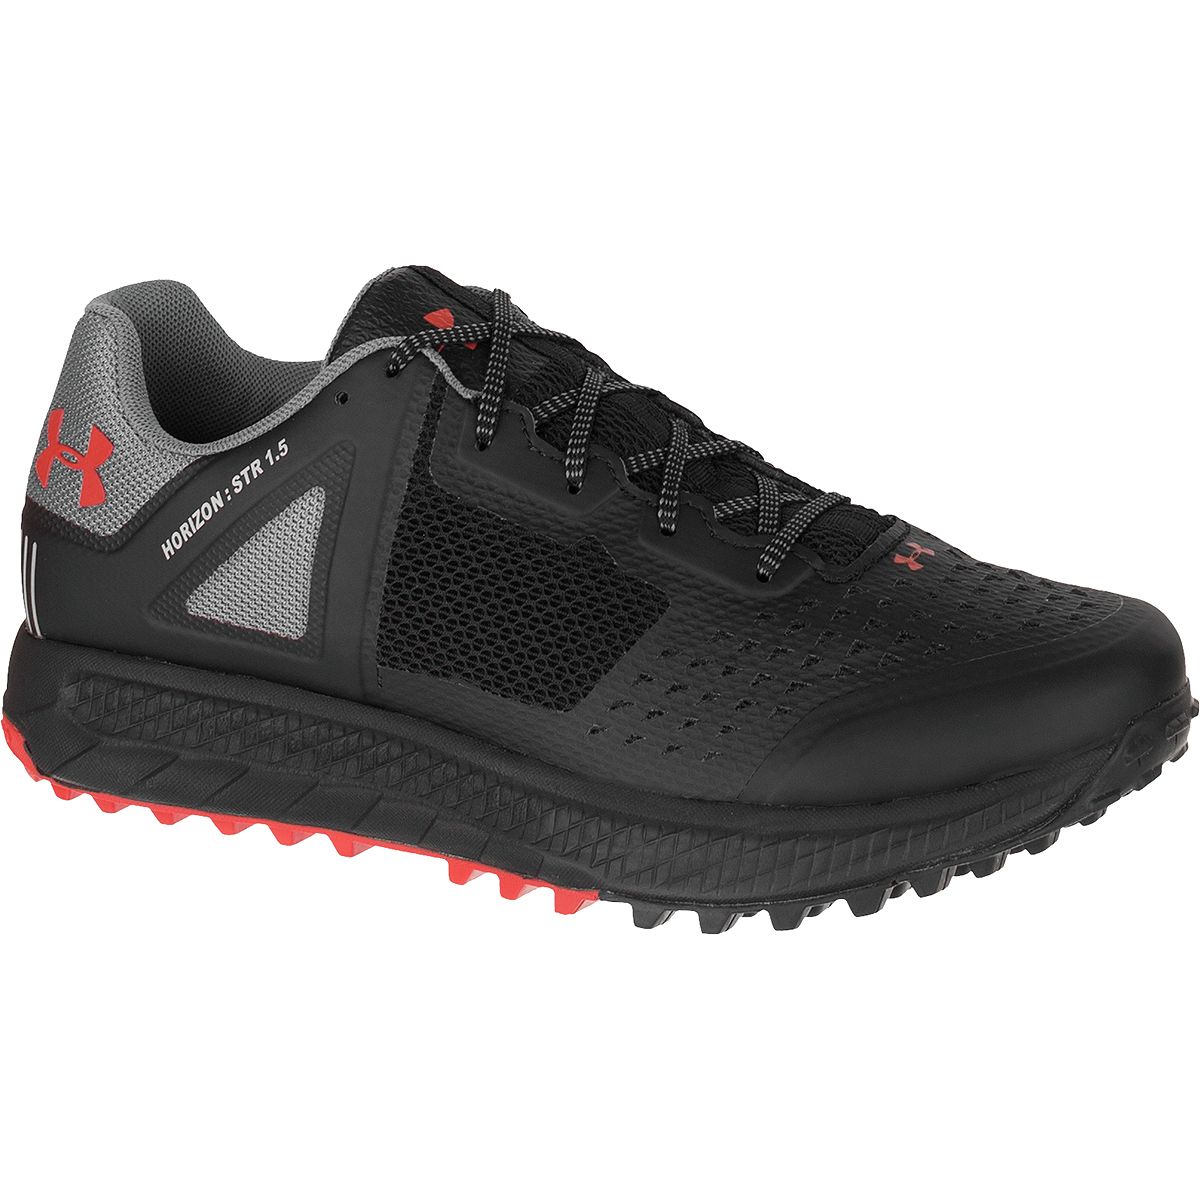 Under Horizon STR 1.5 Hiking - Men's - Footwear